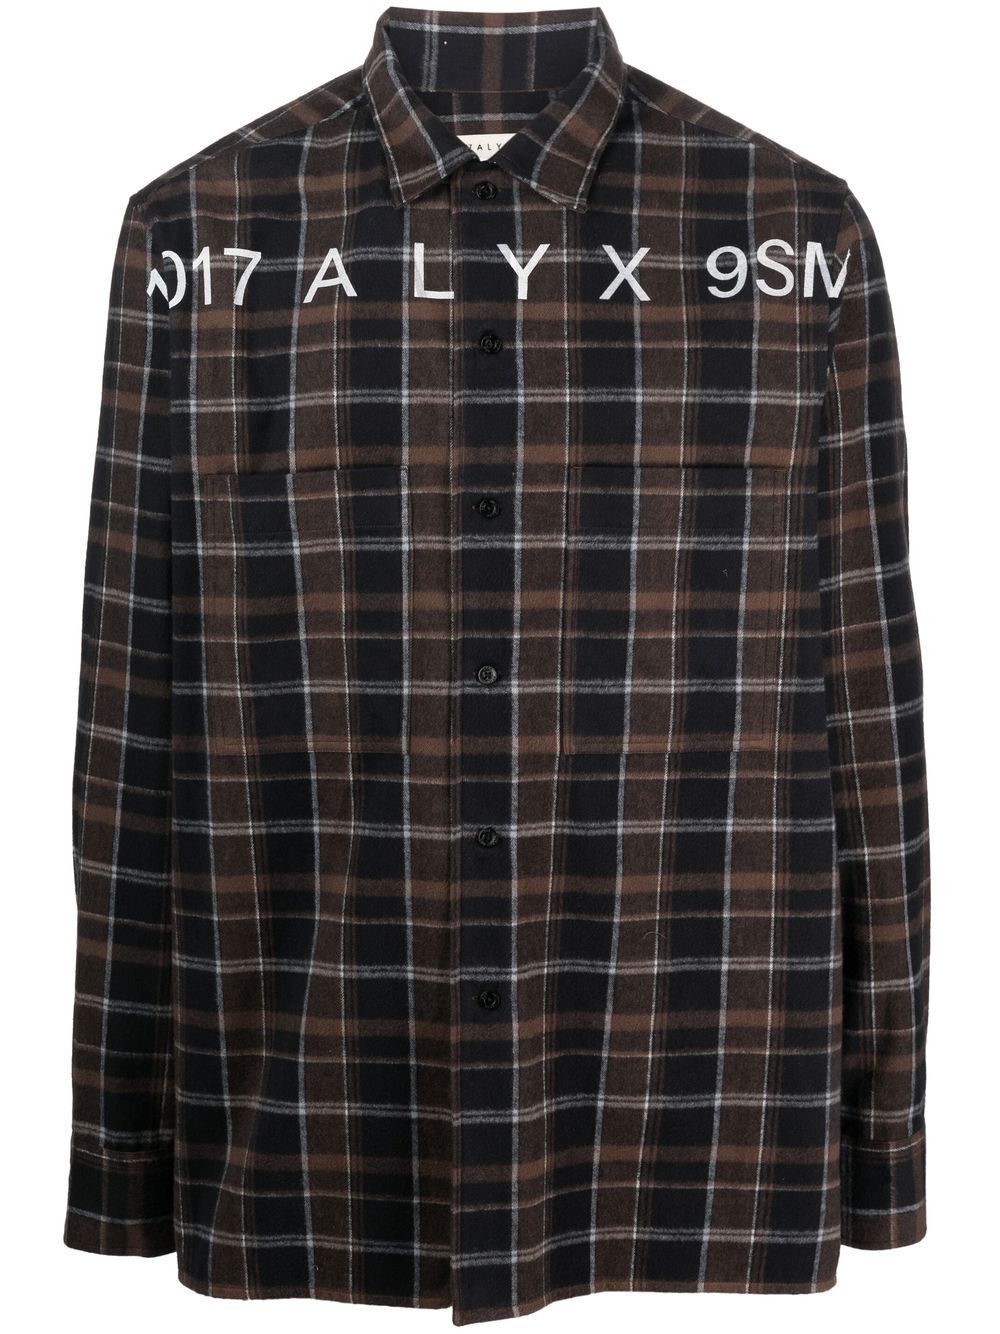 1017 ALYX 9SM cotton tartan long-sleeve shirt - Brown